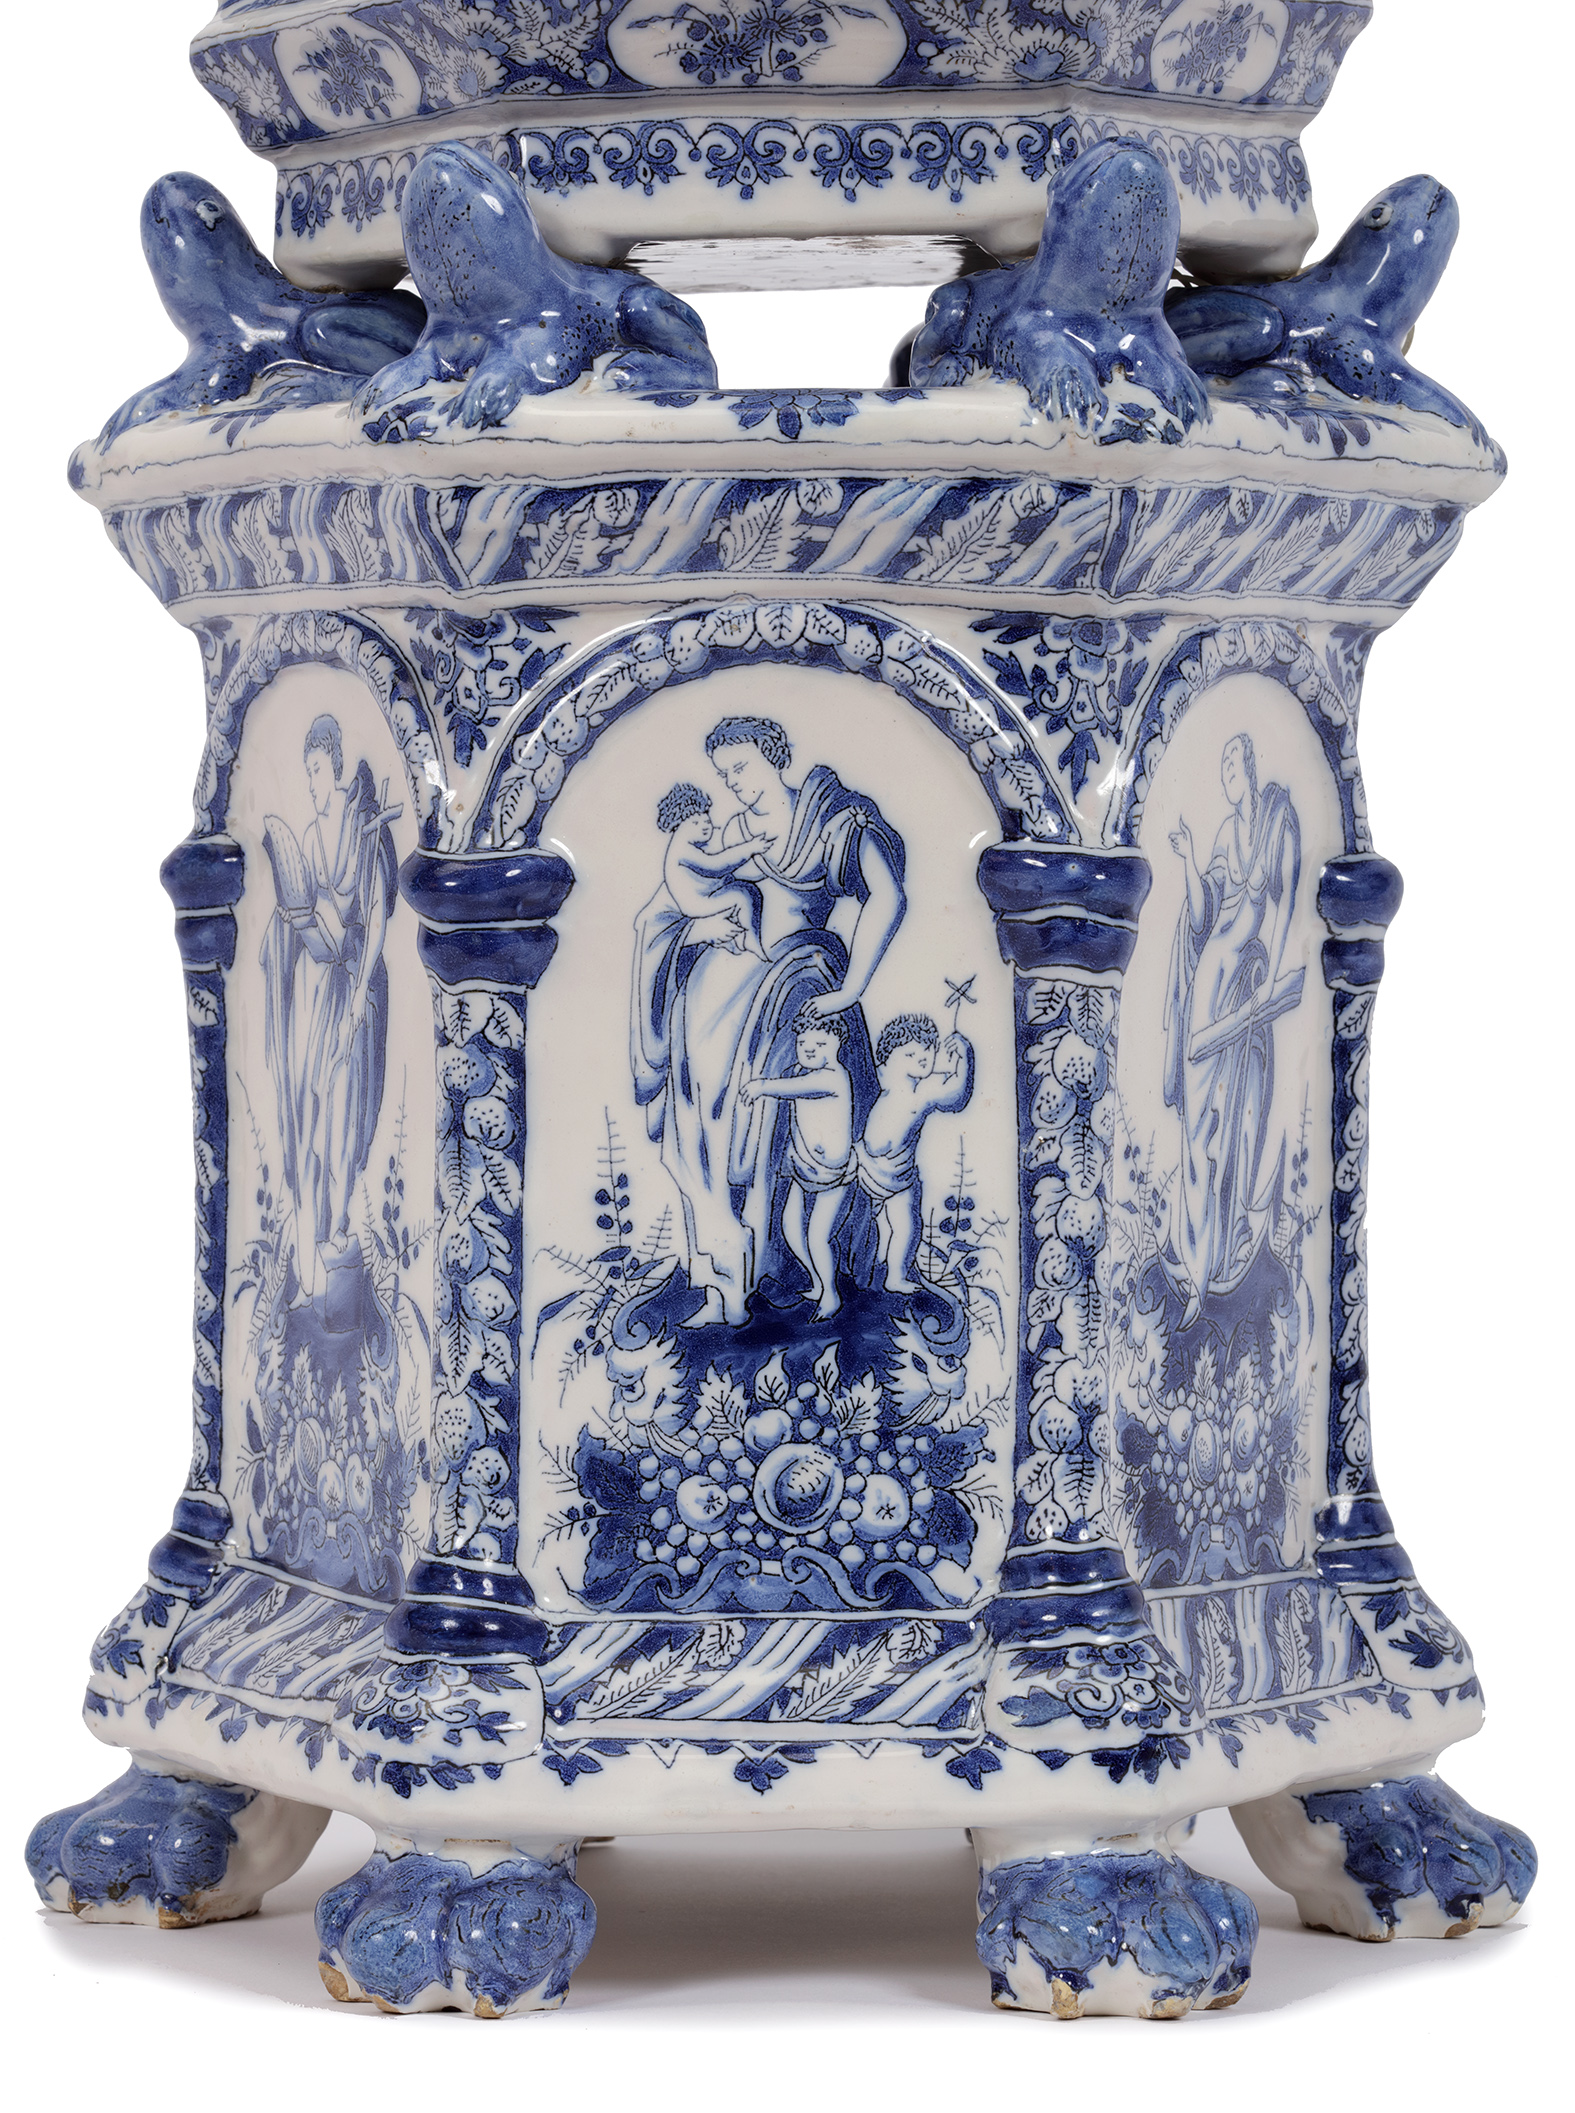 D2392 Blue and White Pyramidal Flower Vase, Adrianus Kocx, The Greek A, Delft, circa 1690